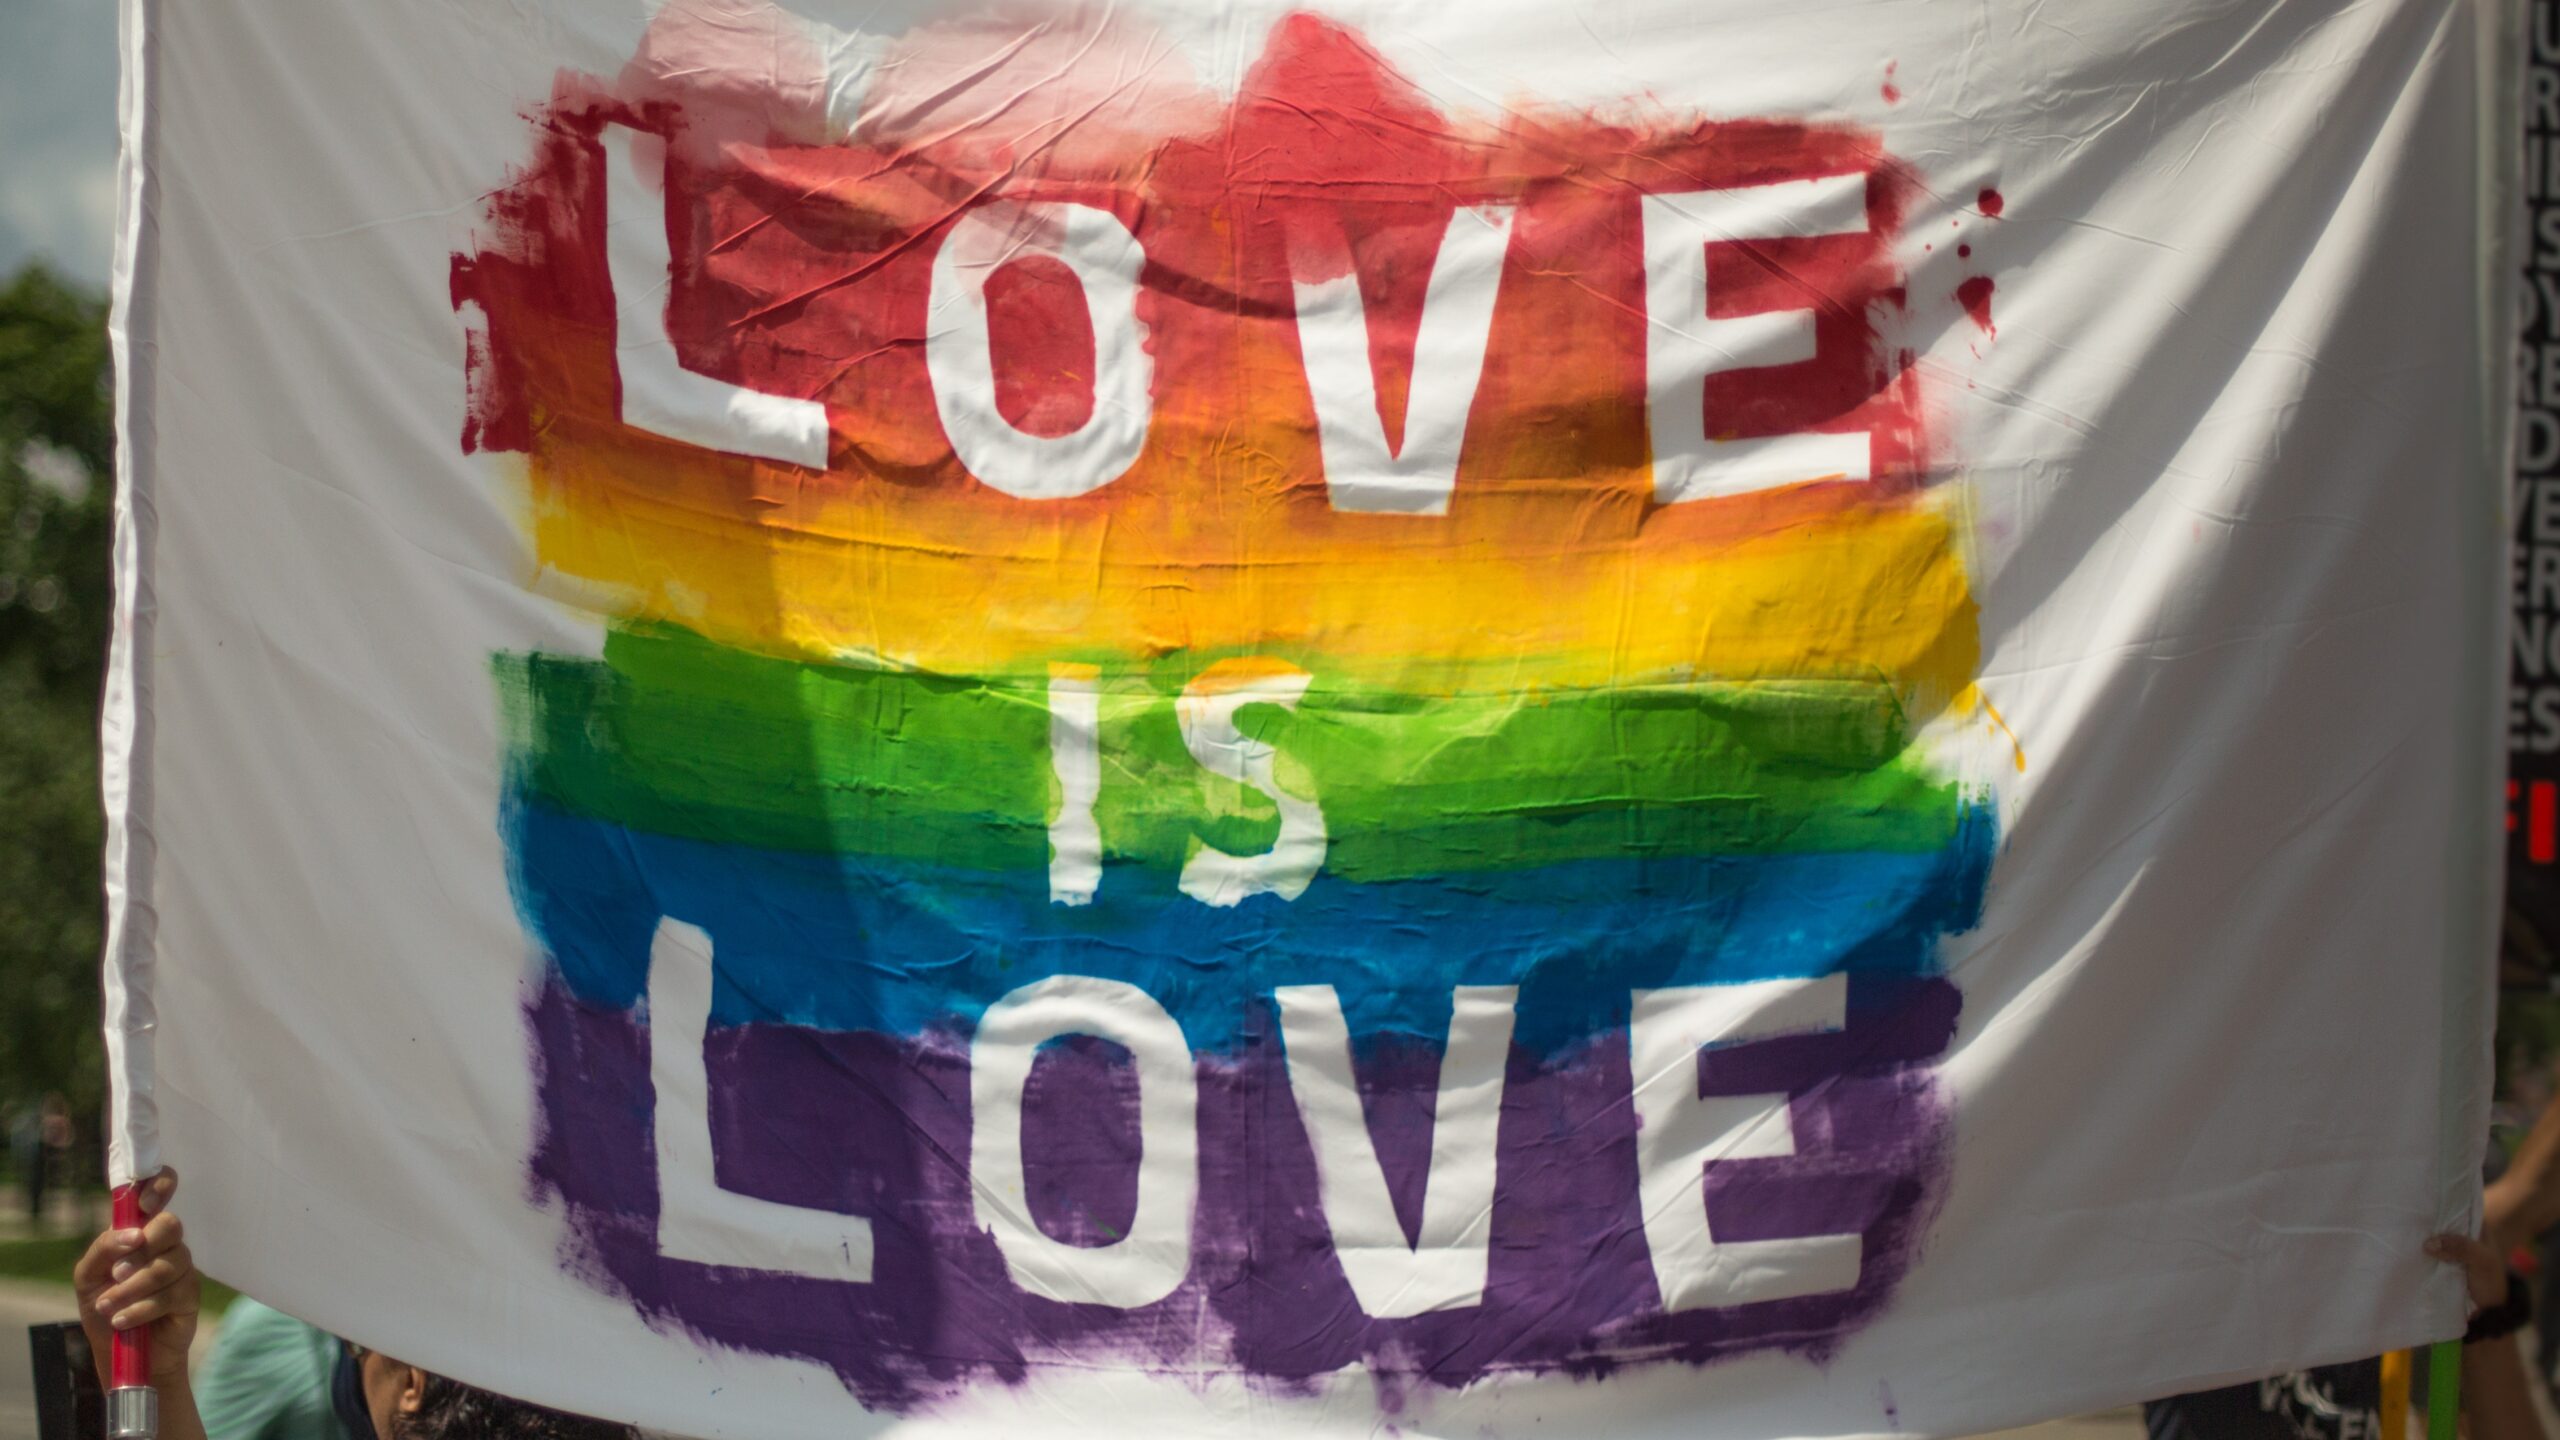 Bandeira "Love is love" em uma manifestação pró-LGBT